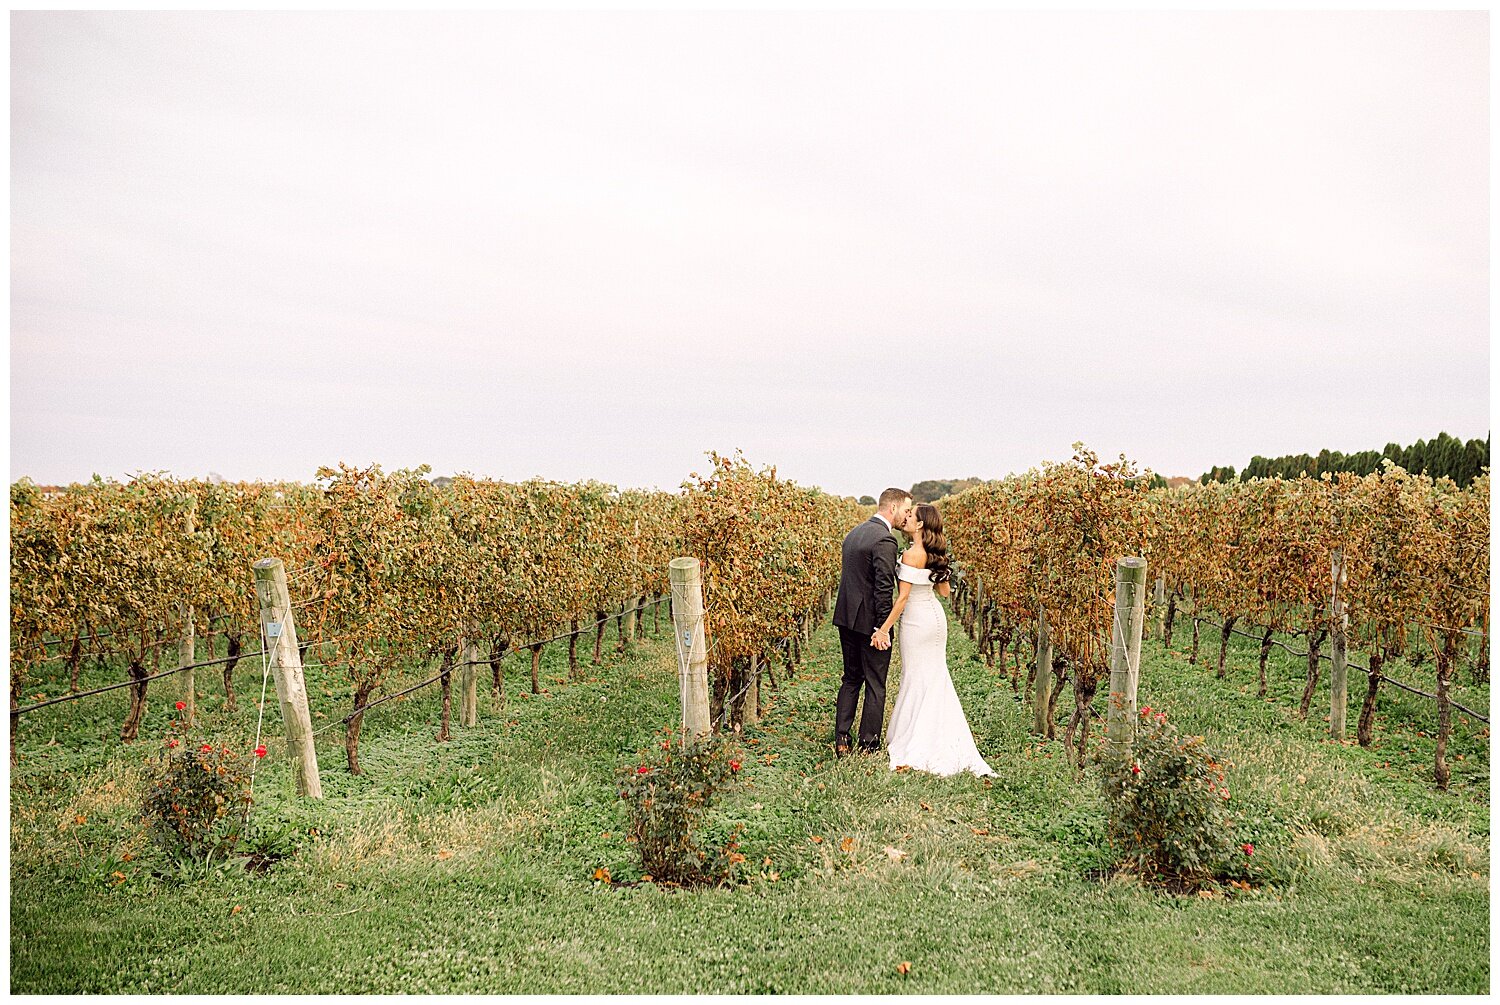 RGNY-Wedding-Photography-North-Fork-Vineyard-Apollo-Fields-059.jpg